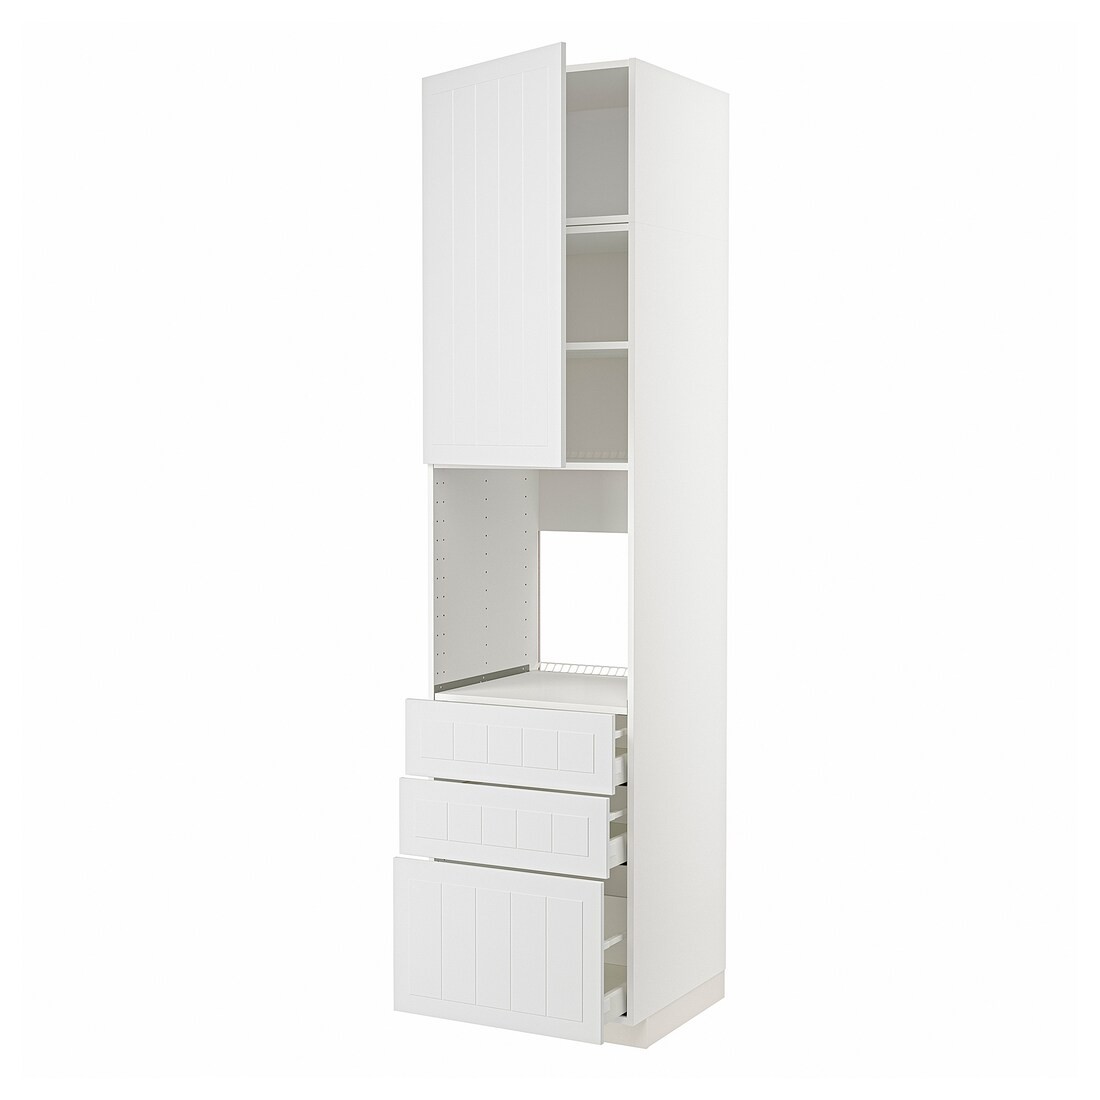 IKEA METOD МЕТОД / MAXIMERA МАКСИМЕРА Высокий шкаф для духовки, белый / Stensund белый, 60x60x240 см 29466970 | 294.669.70